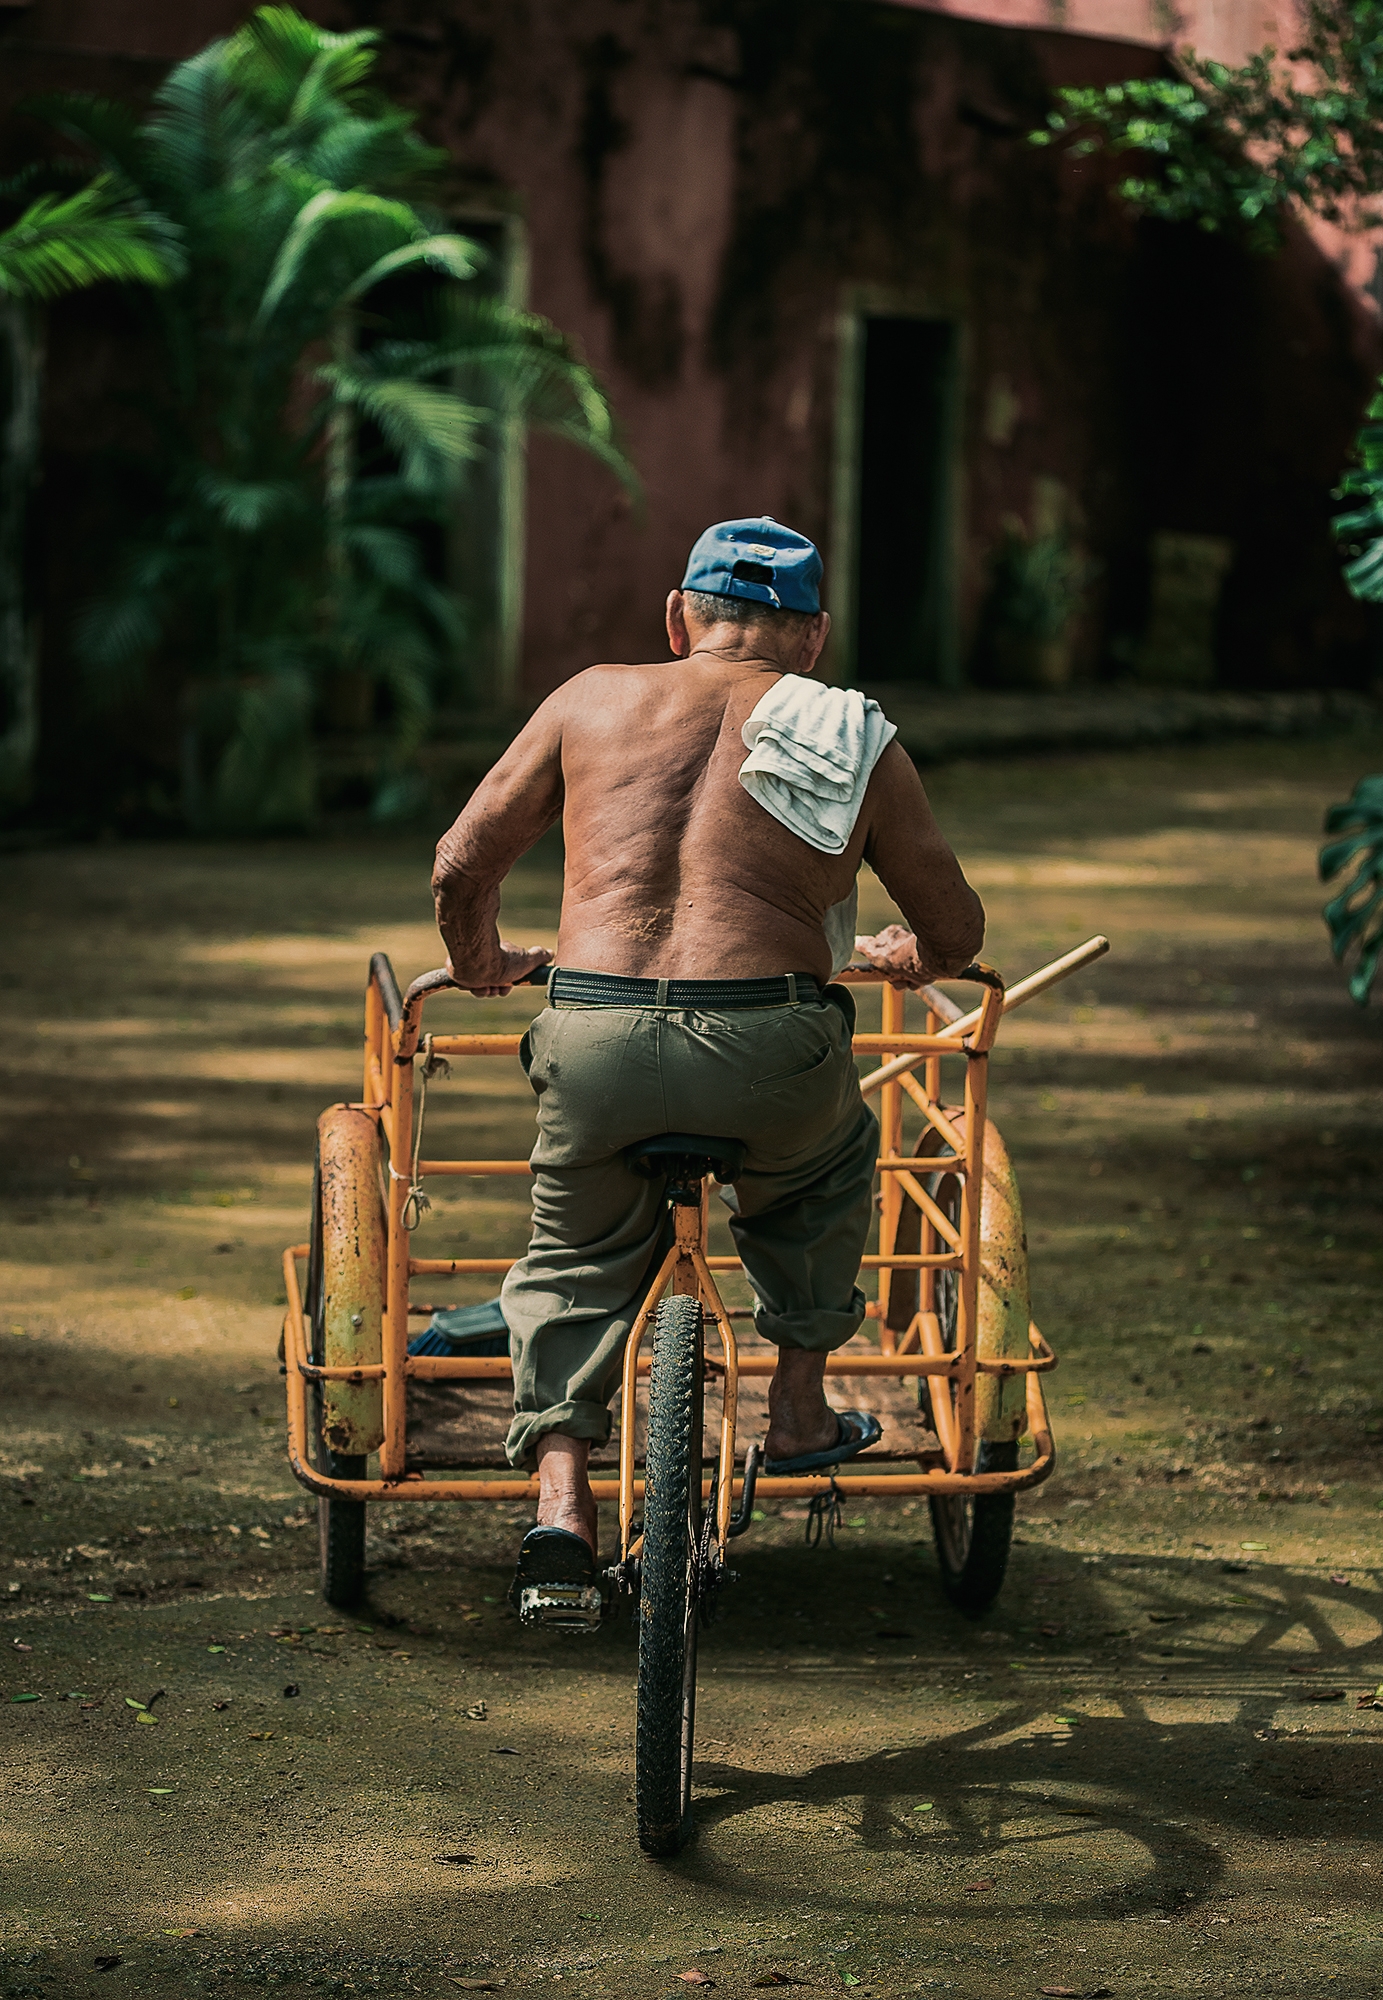 Roban triciclo a un abuelito en Chocholá, Yucatán